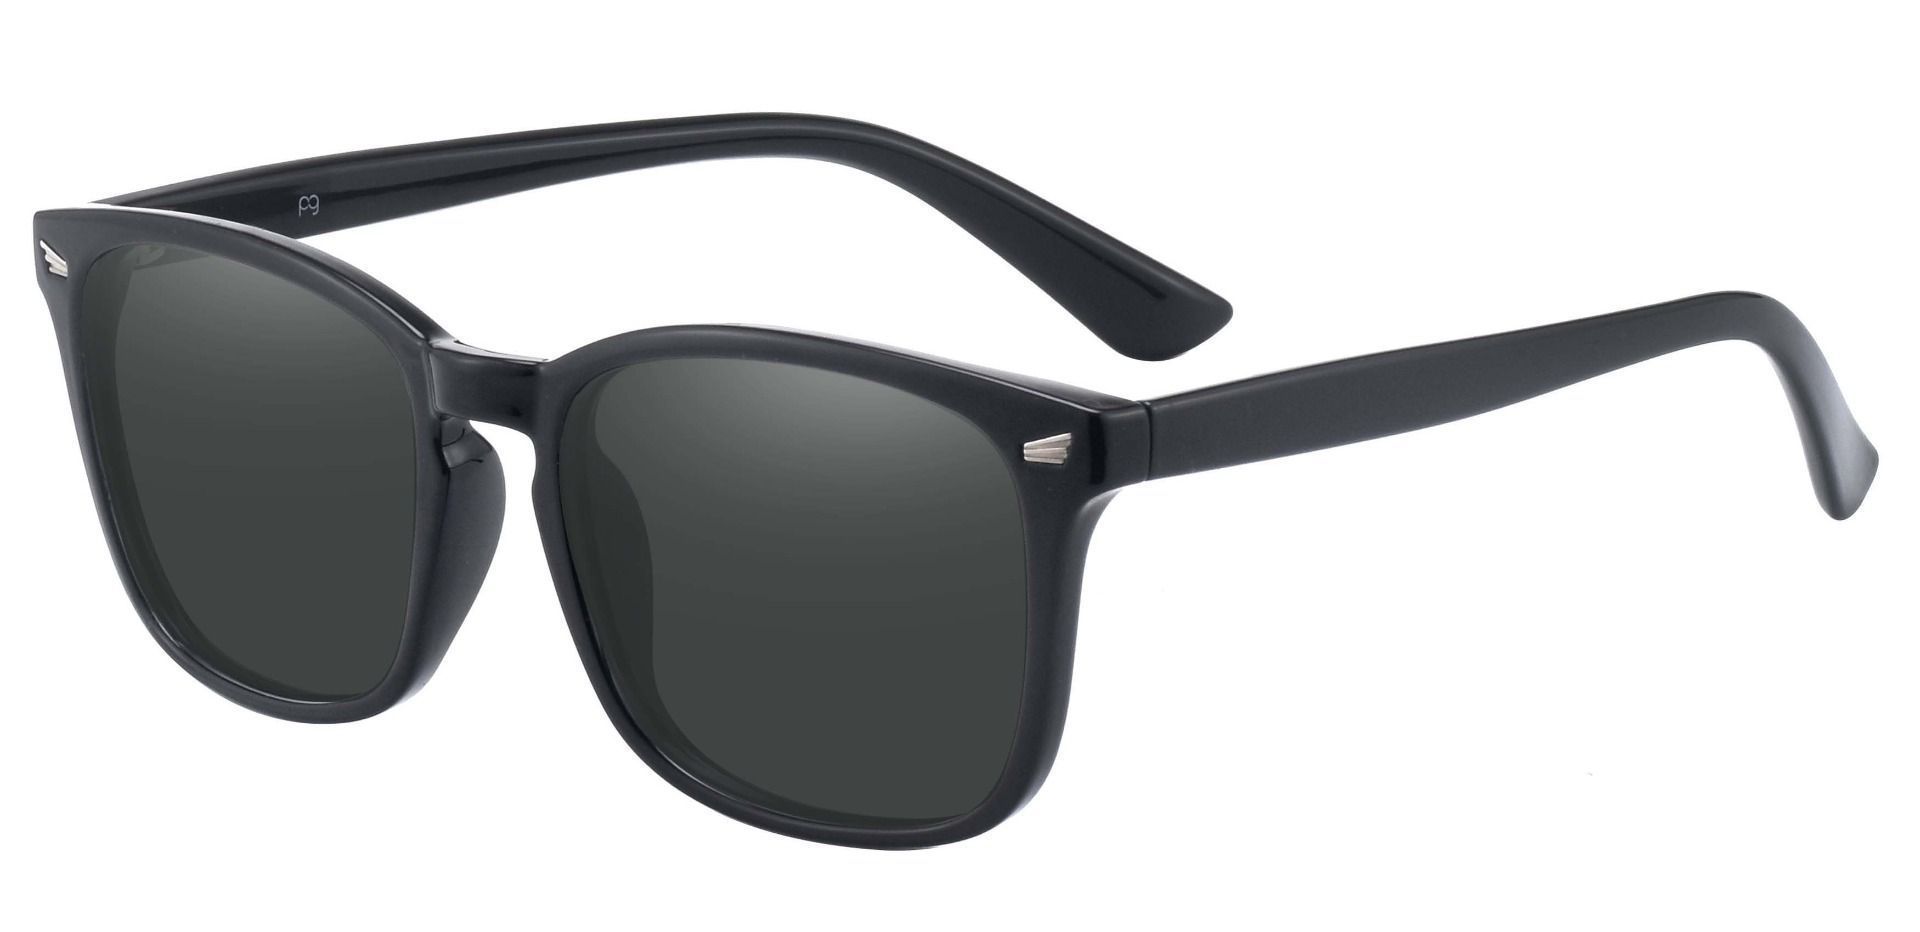 Rogan Square Prescription Sunglasses - Black Frame With Gray Lenses